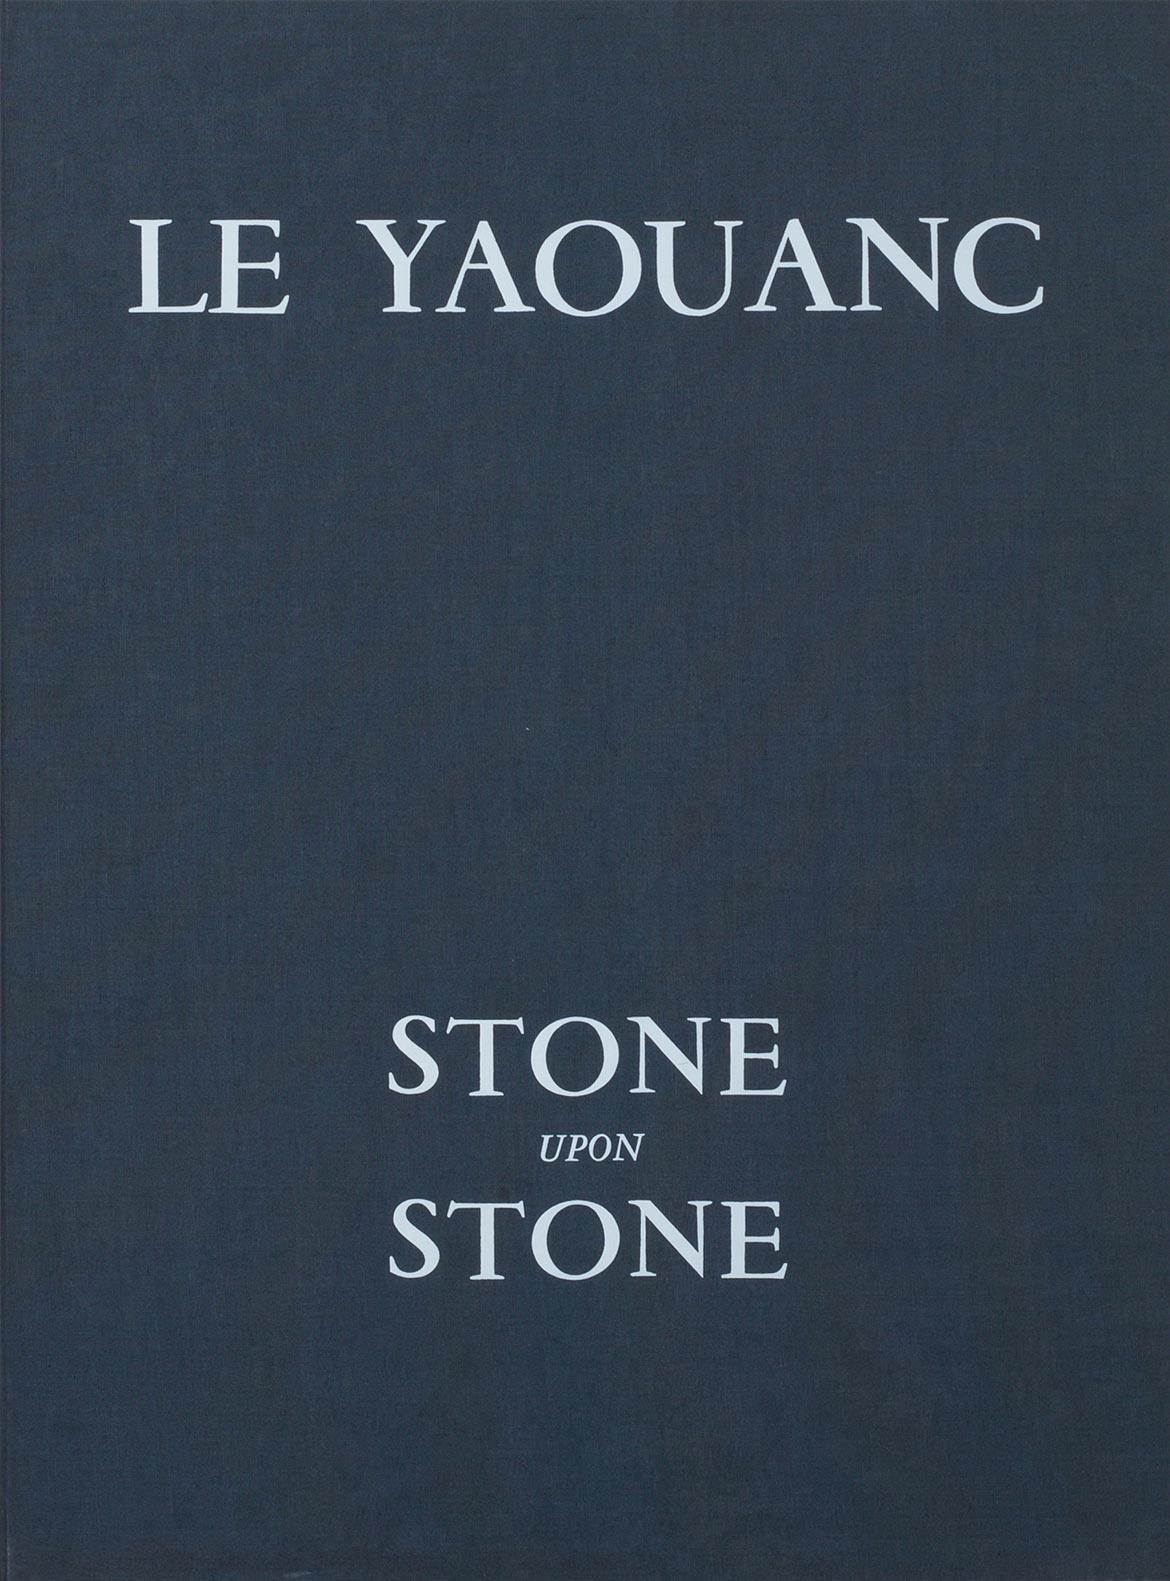 Stone upon stone